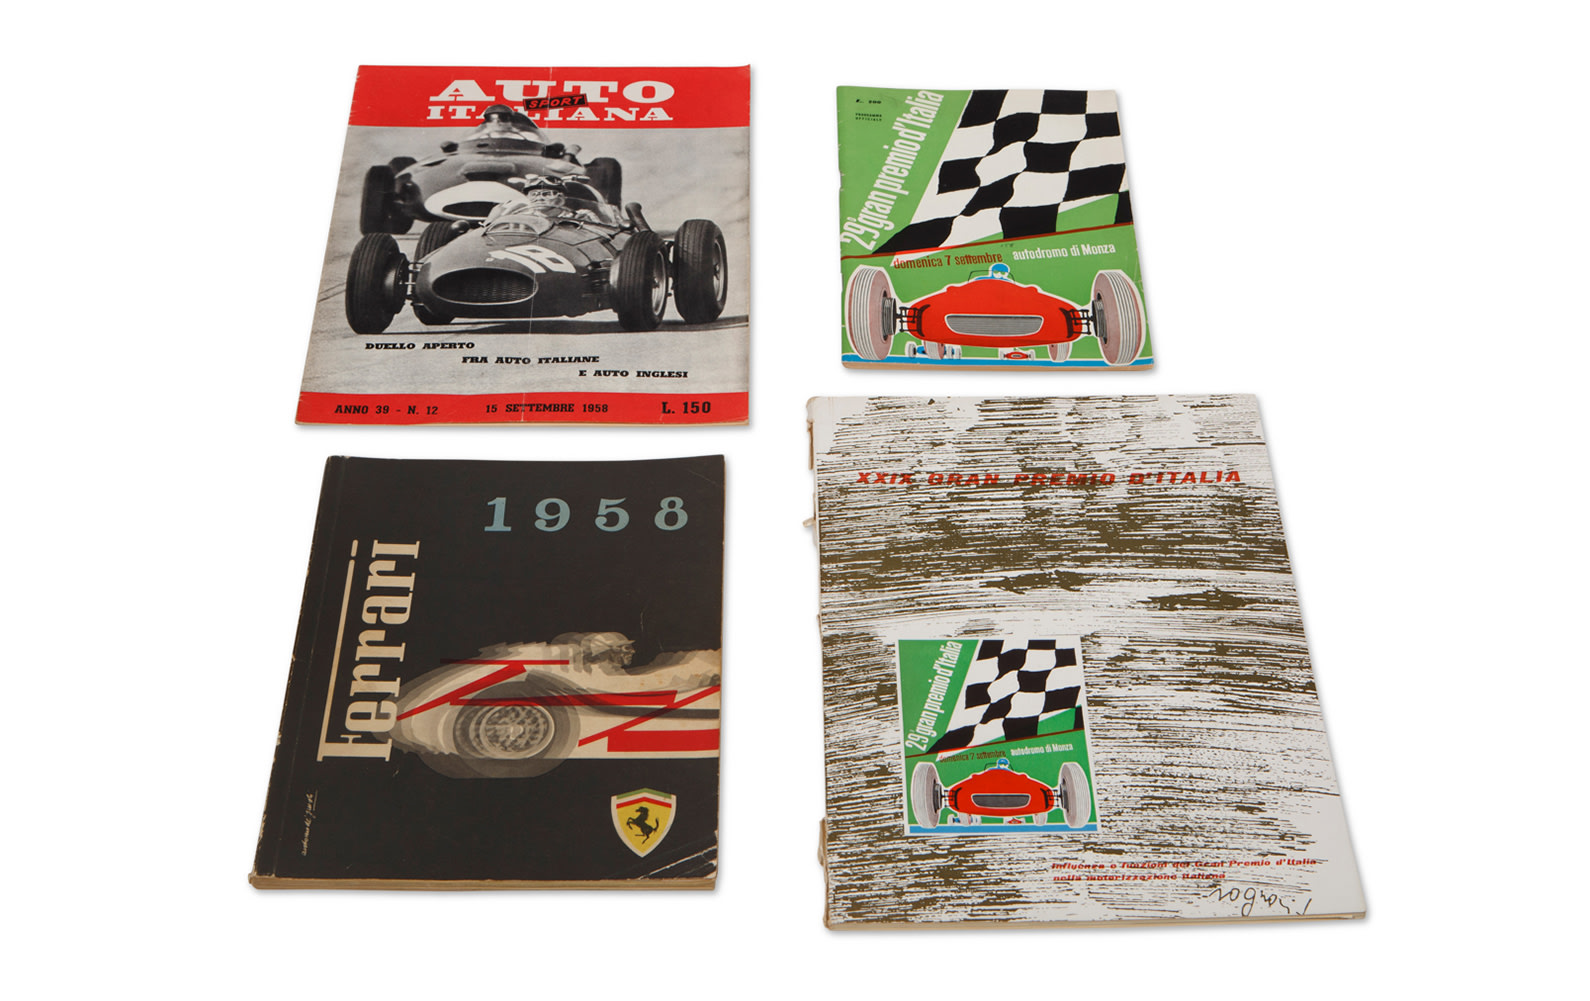 1958 Italian Grand Prix Official Race Programs, Ferrari Yearbook, and Auto Italiana Sport Magazine